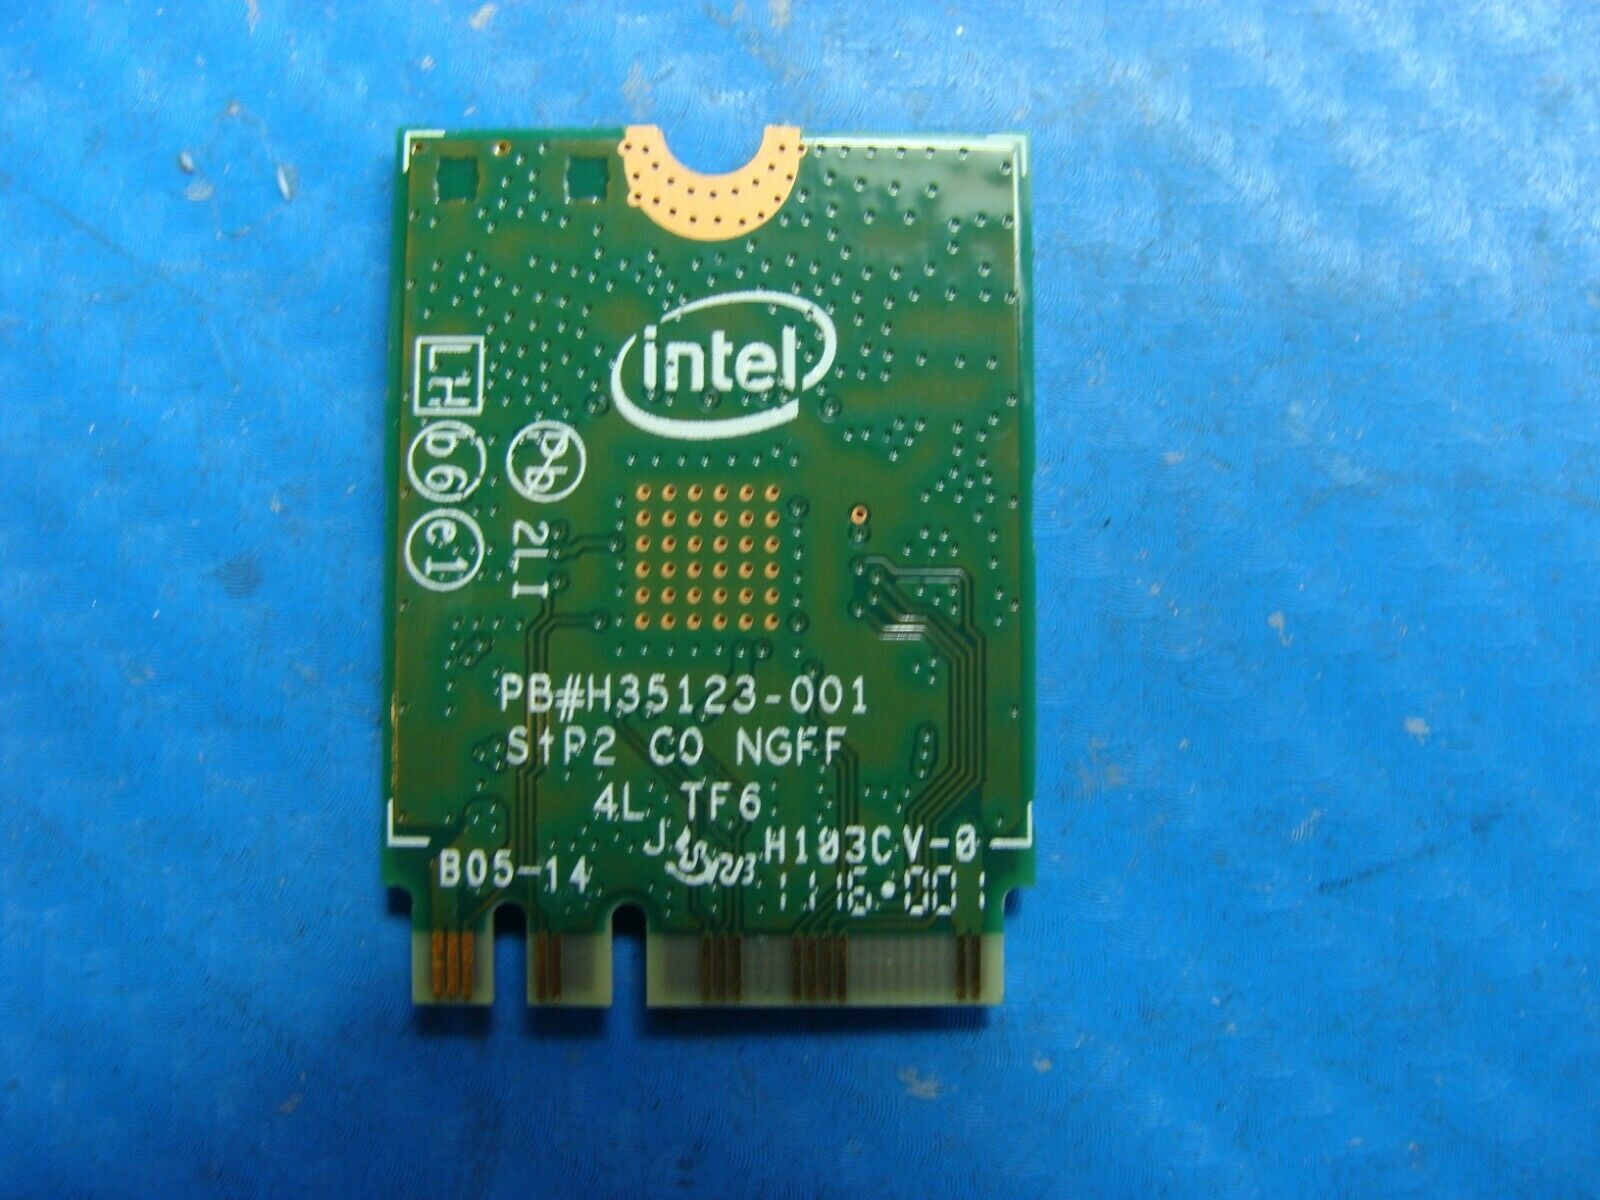 HP 750-137c Genuine Desktop Wireless WiFi Card 3165NGW 806723-001 - Laptop Parts - Buy Authentic Computer Parts - Top Seller Ebay